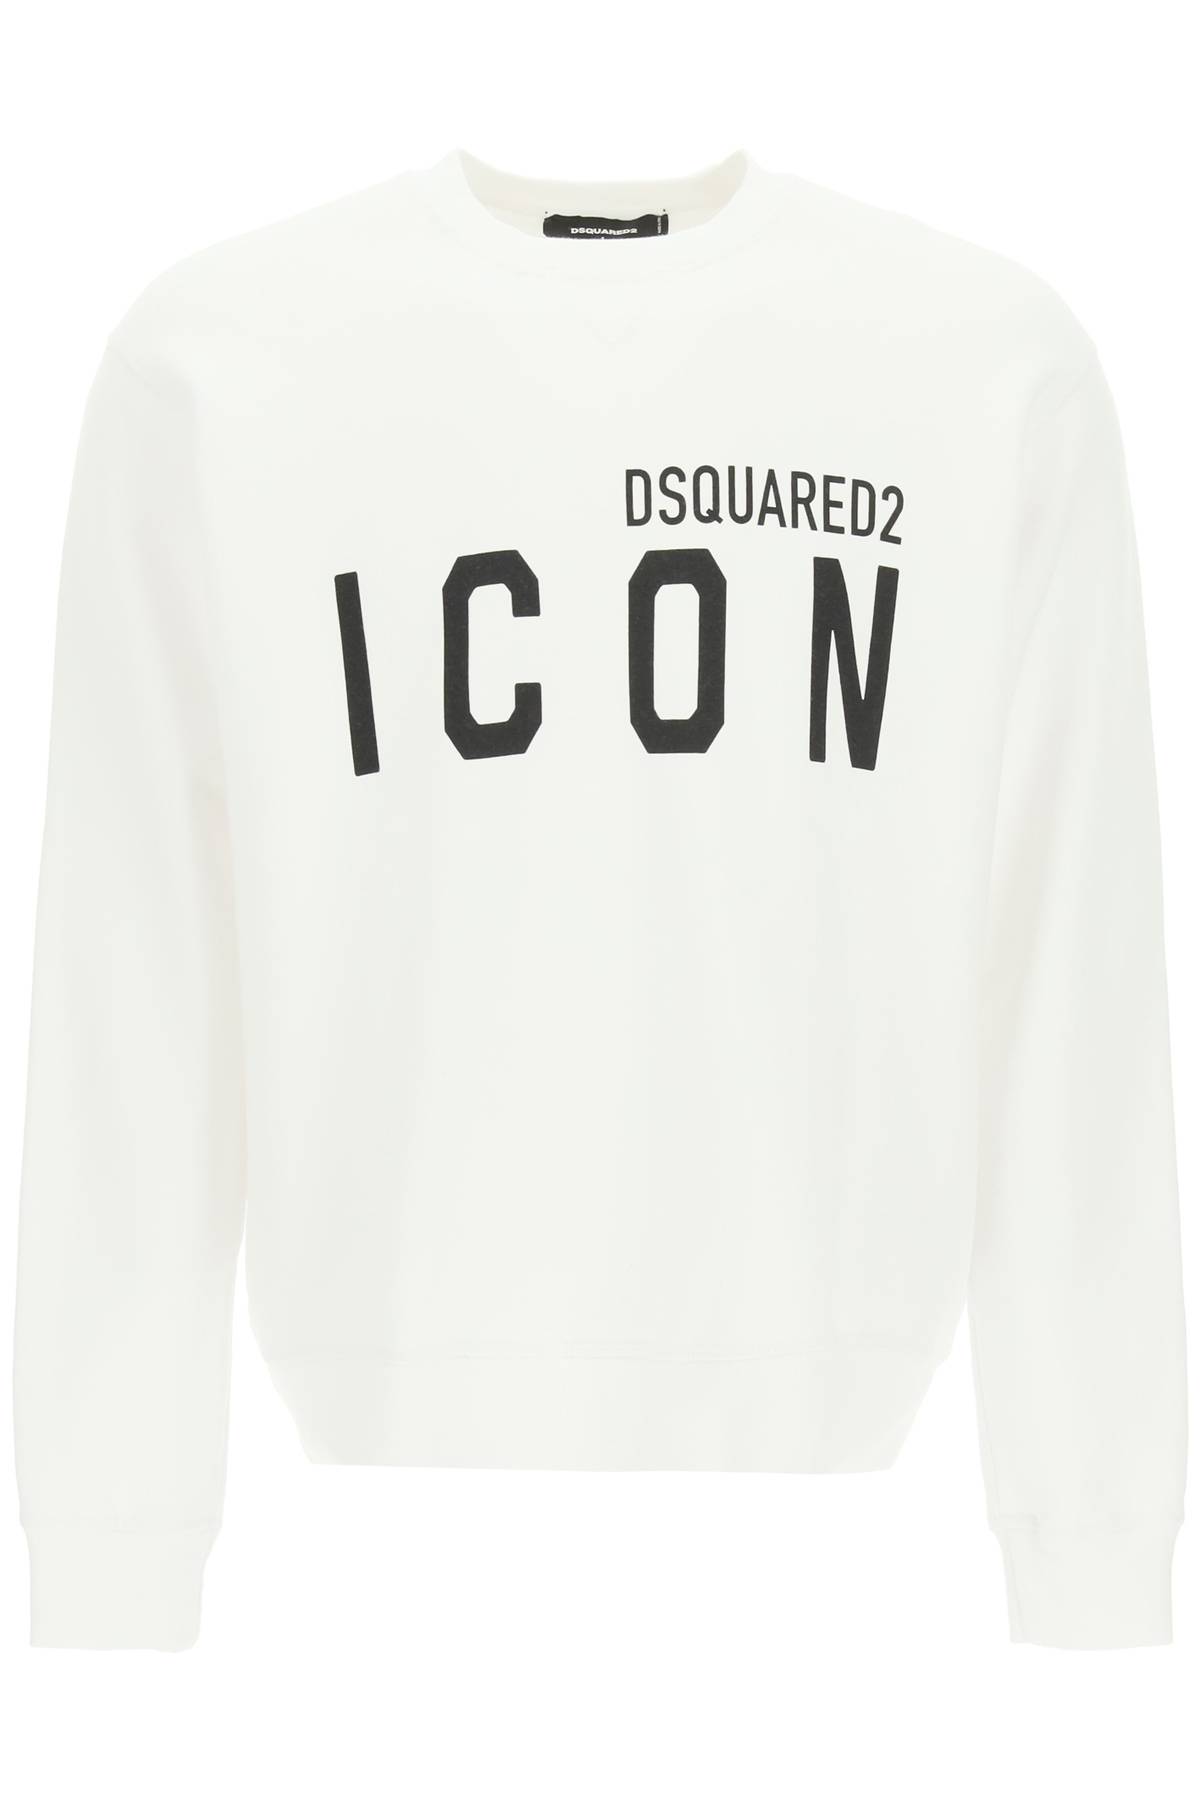 Dsquared2 DSQUARED2 icon logo sweatshirt